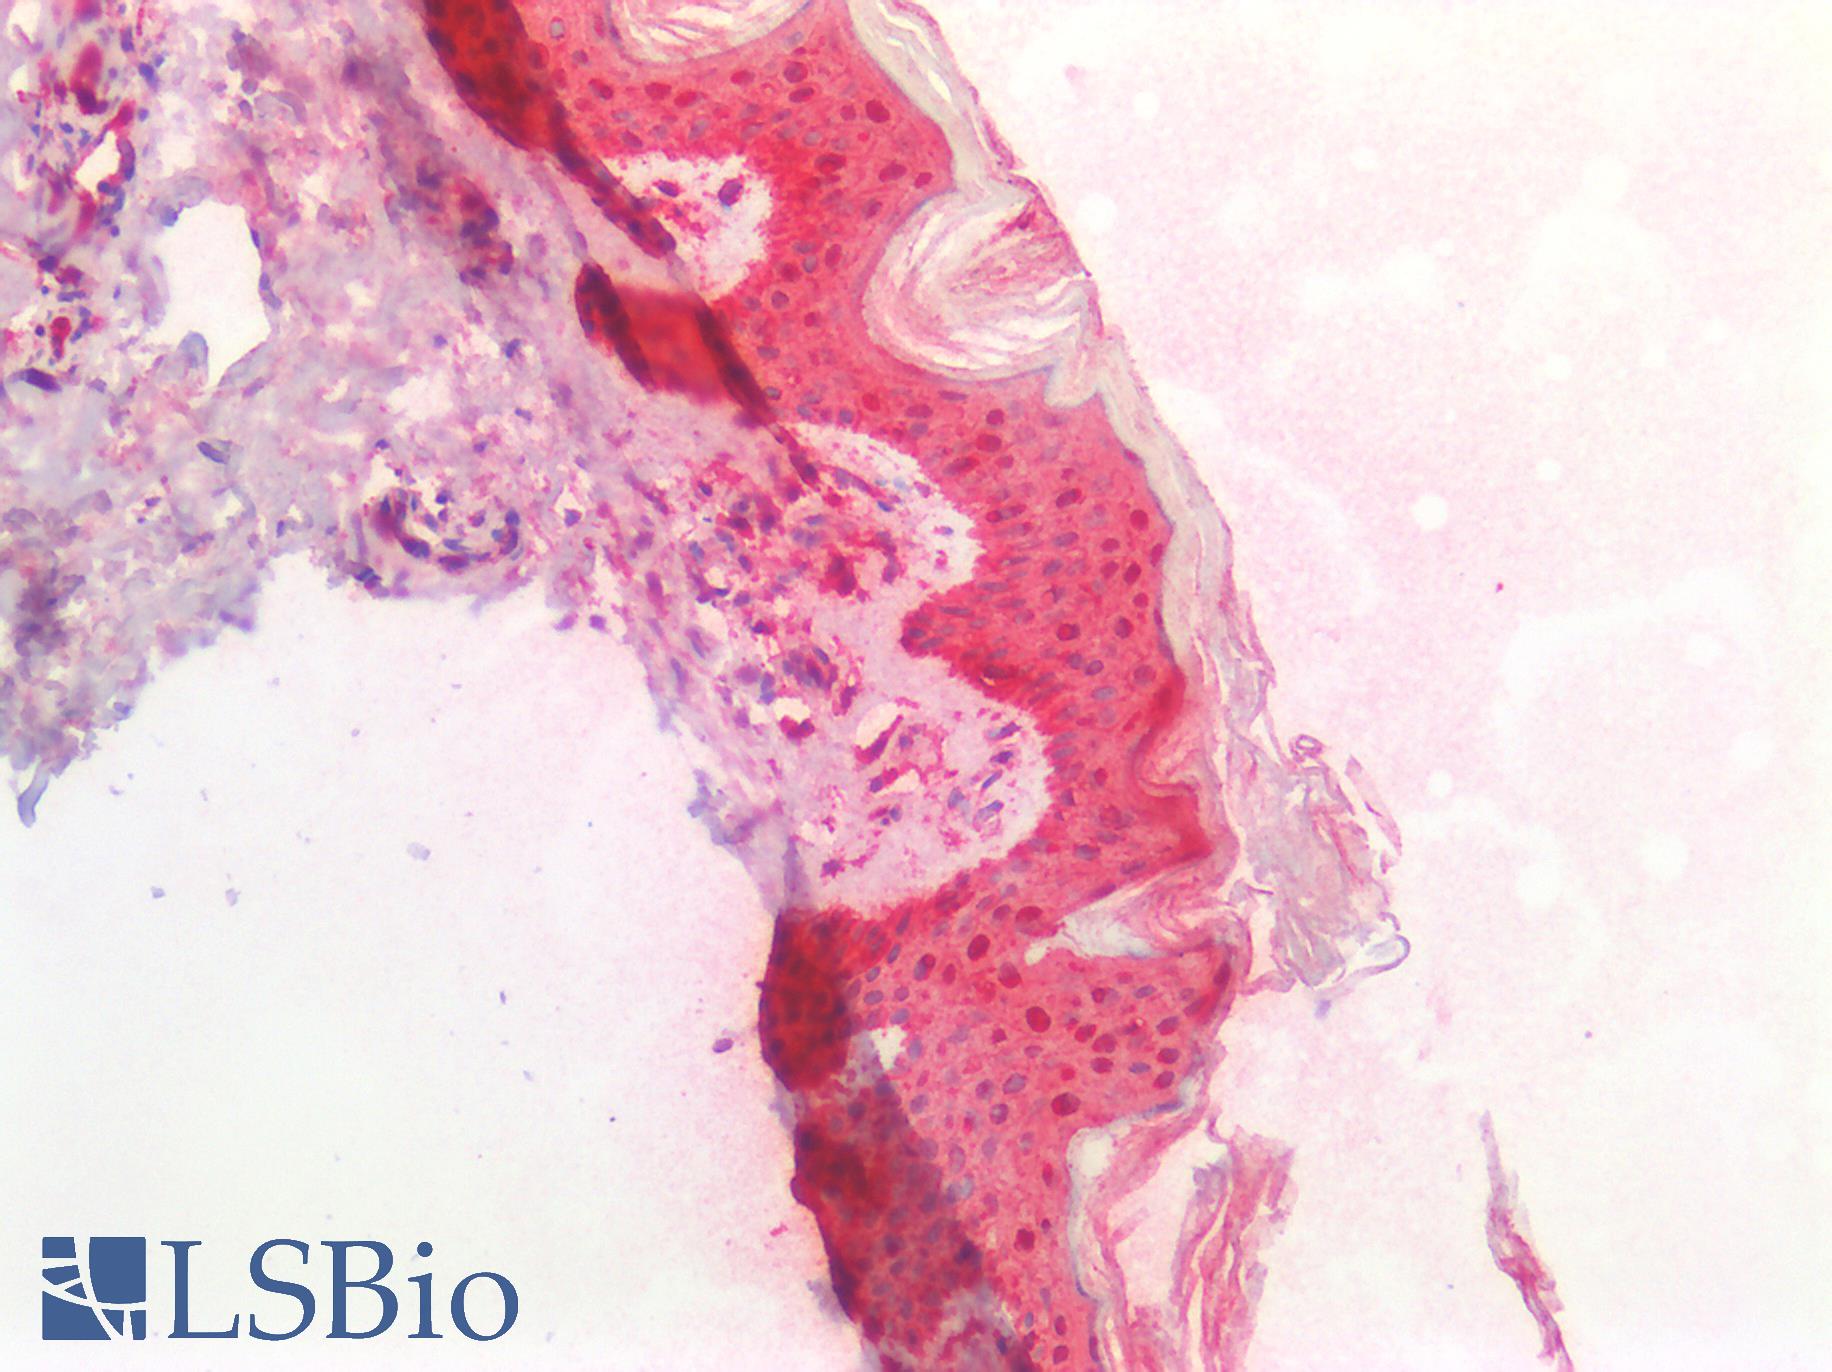 HSPB1 / HSP27 Antibody - Human Skin: Formalin-Fixed, Paraffin-Embedded (FFPE)